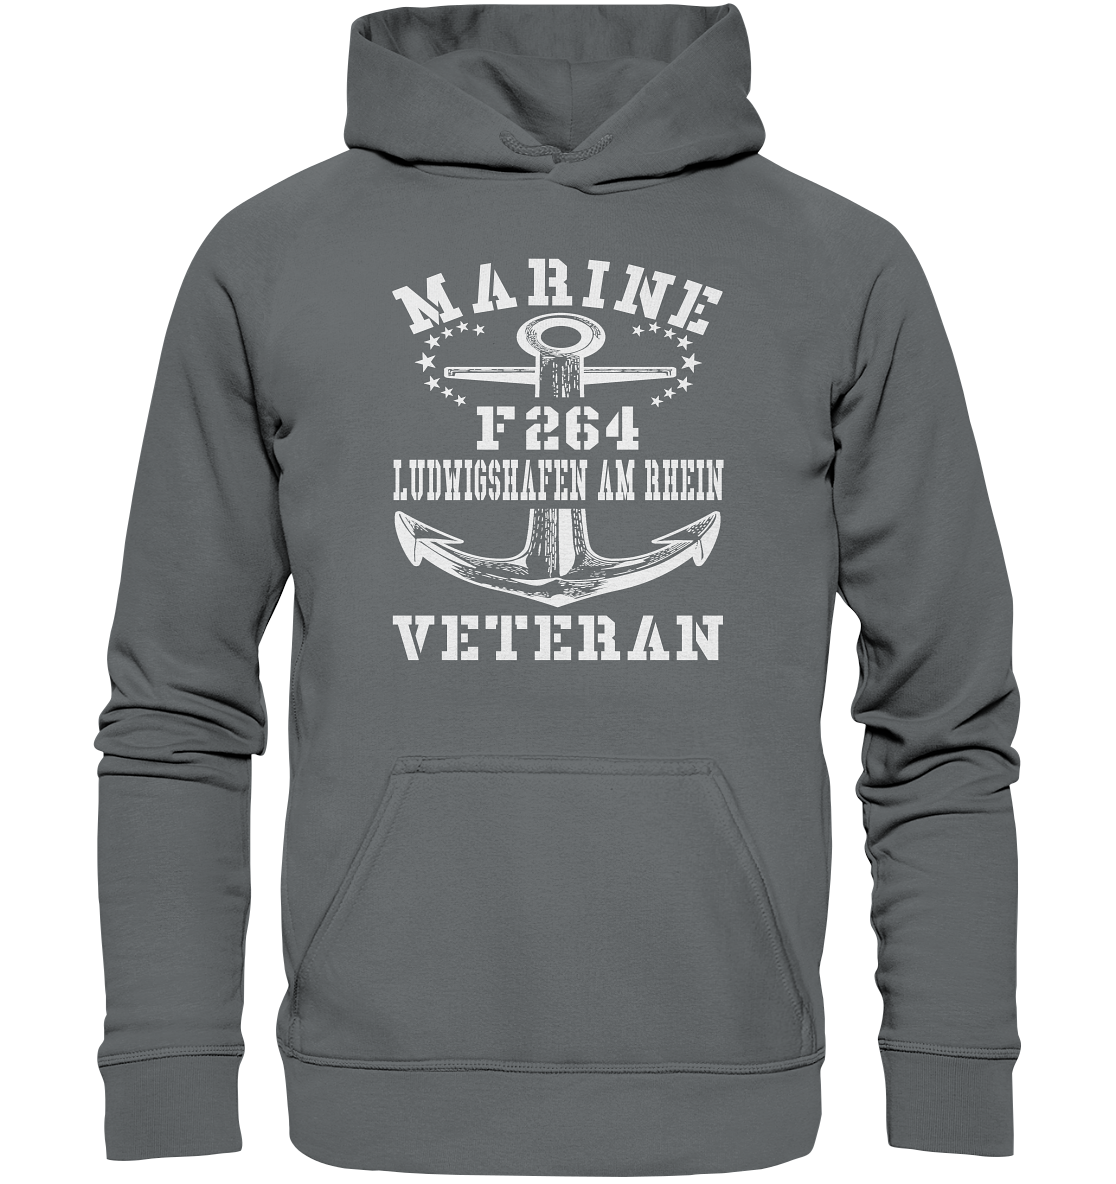 Korvette F264 LUDWIGSHAFEN AM RHEIN Marine Veteran - Basic Unisex Hoodie